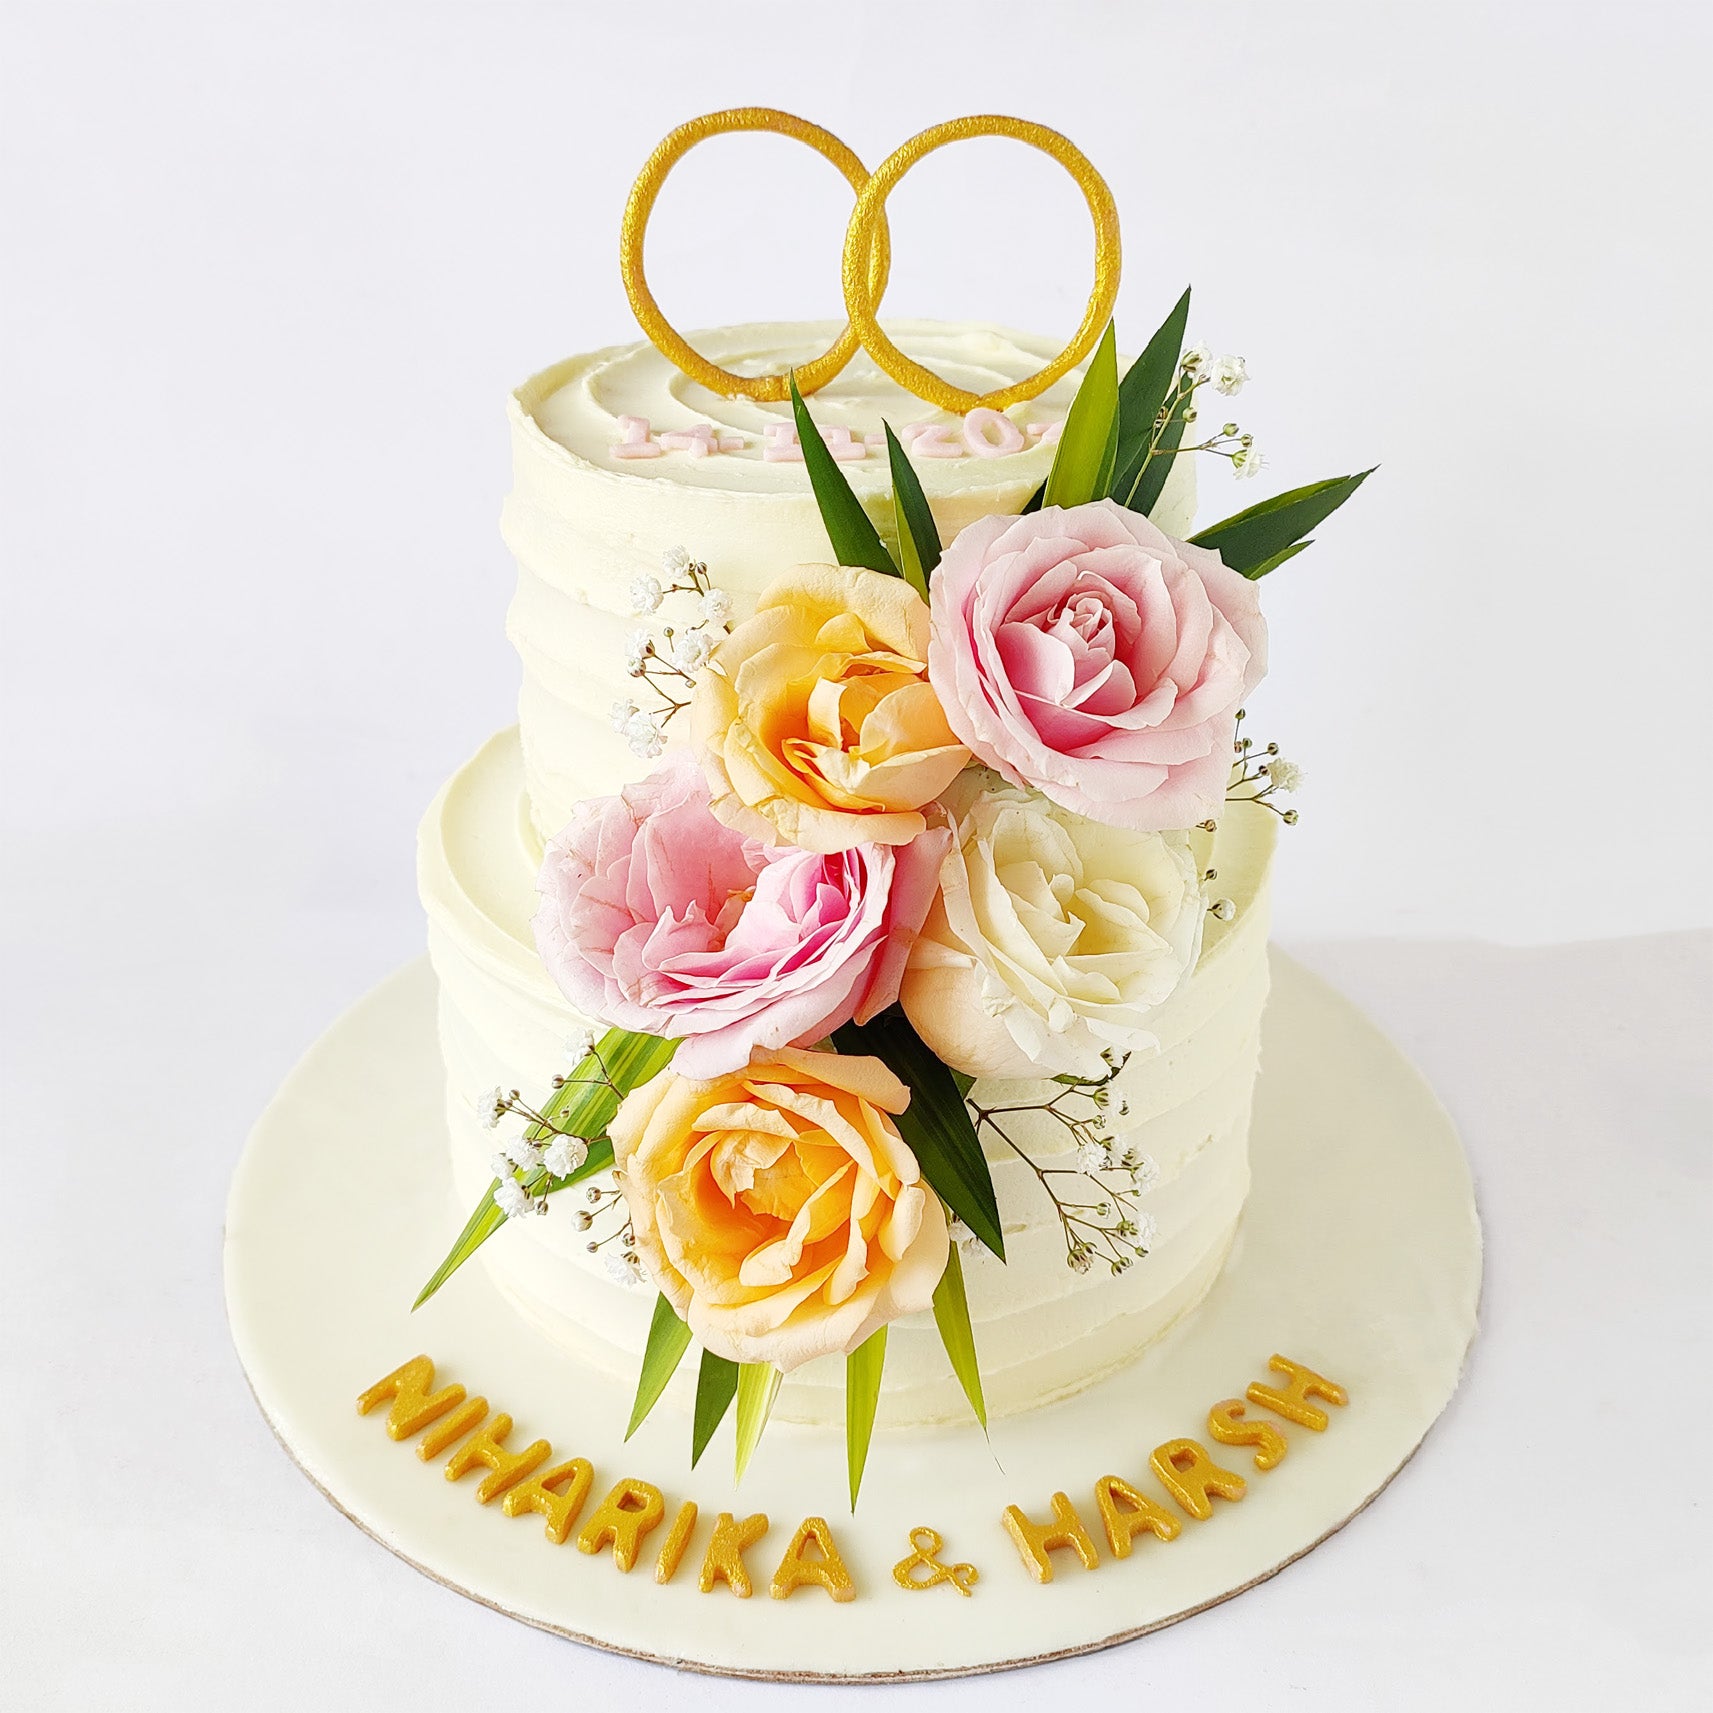 Proposal Cake Engagement Ring Stock Photo 614669171 | Shutterstock